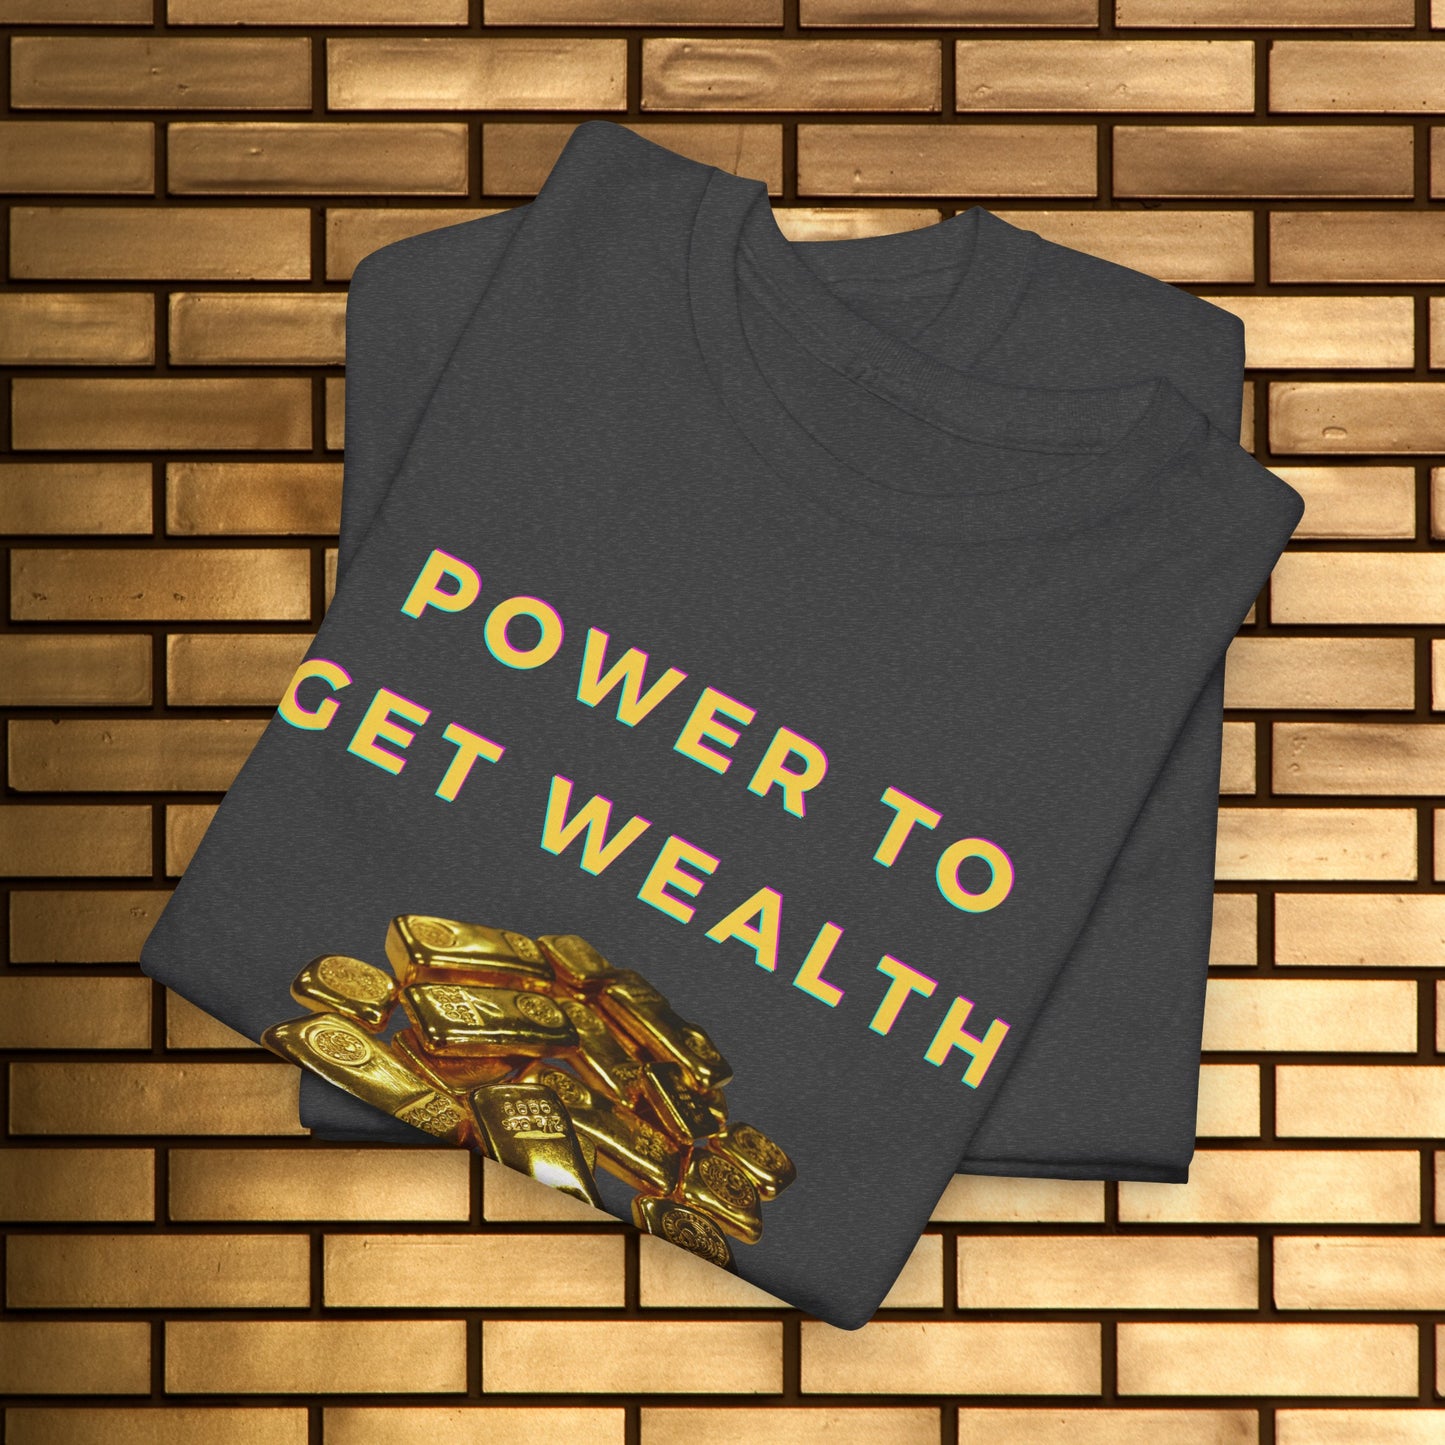 "Power to Get Wealth" Collection: Deuteronomy 8:18 Men's Heavy Cotton T-Shirt